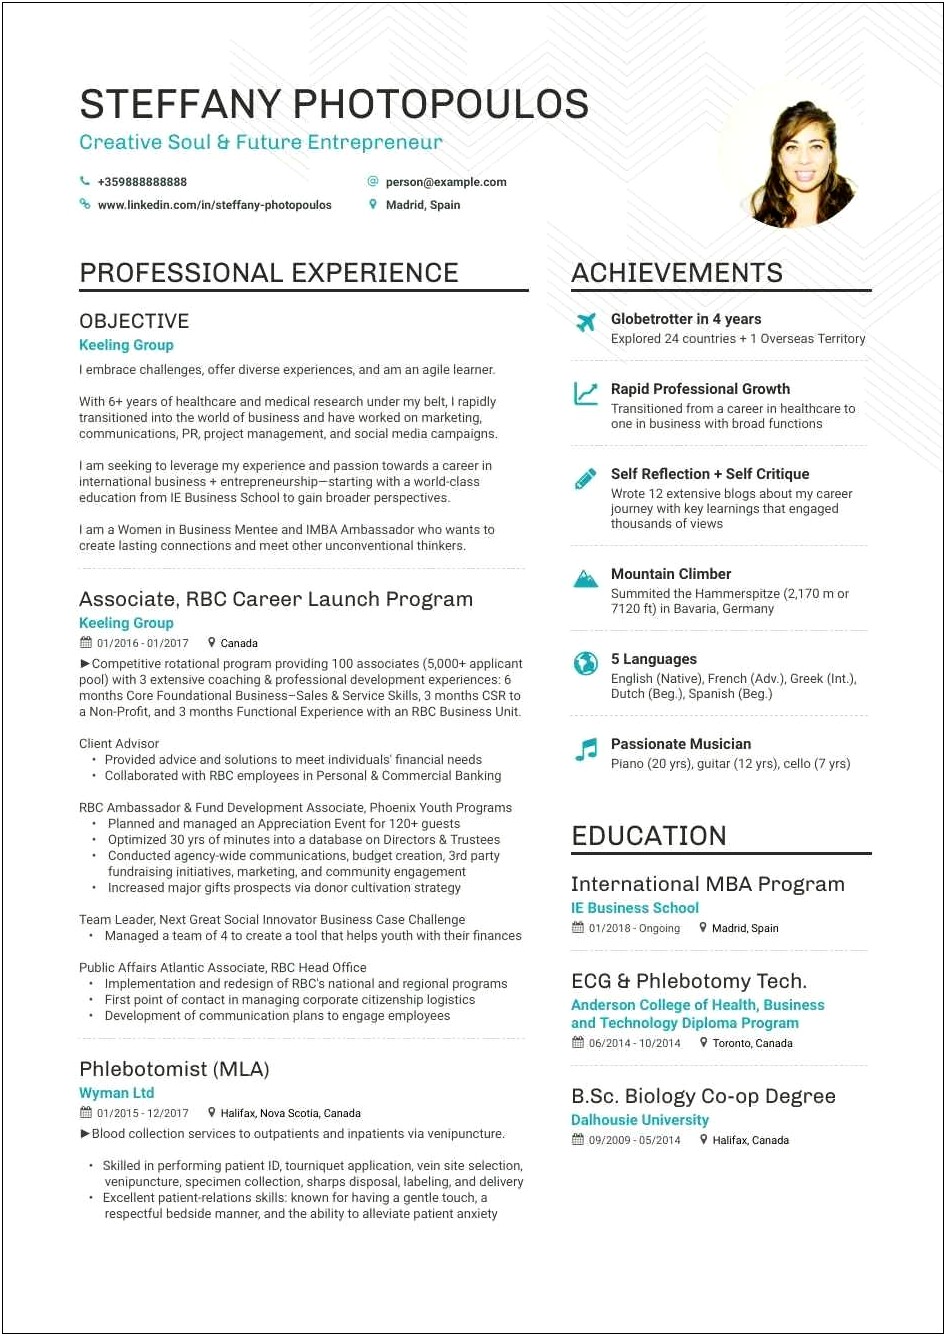 Phlebotomist Job Summary For Resume